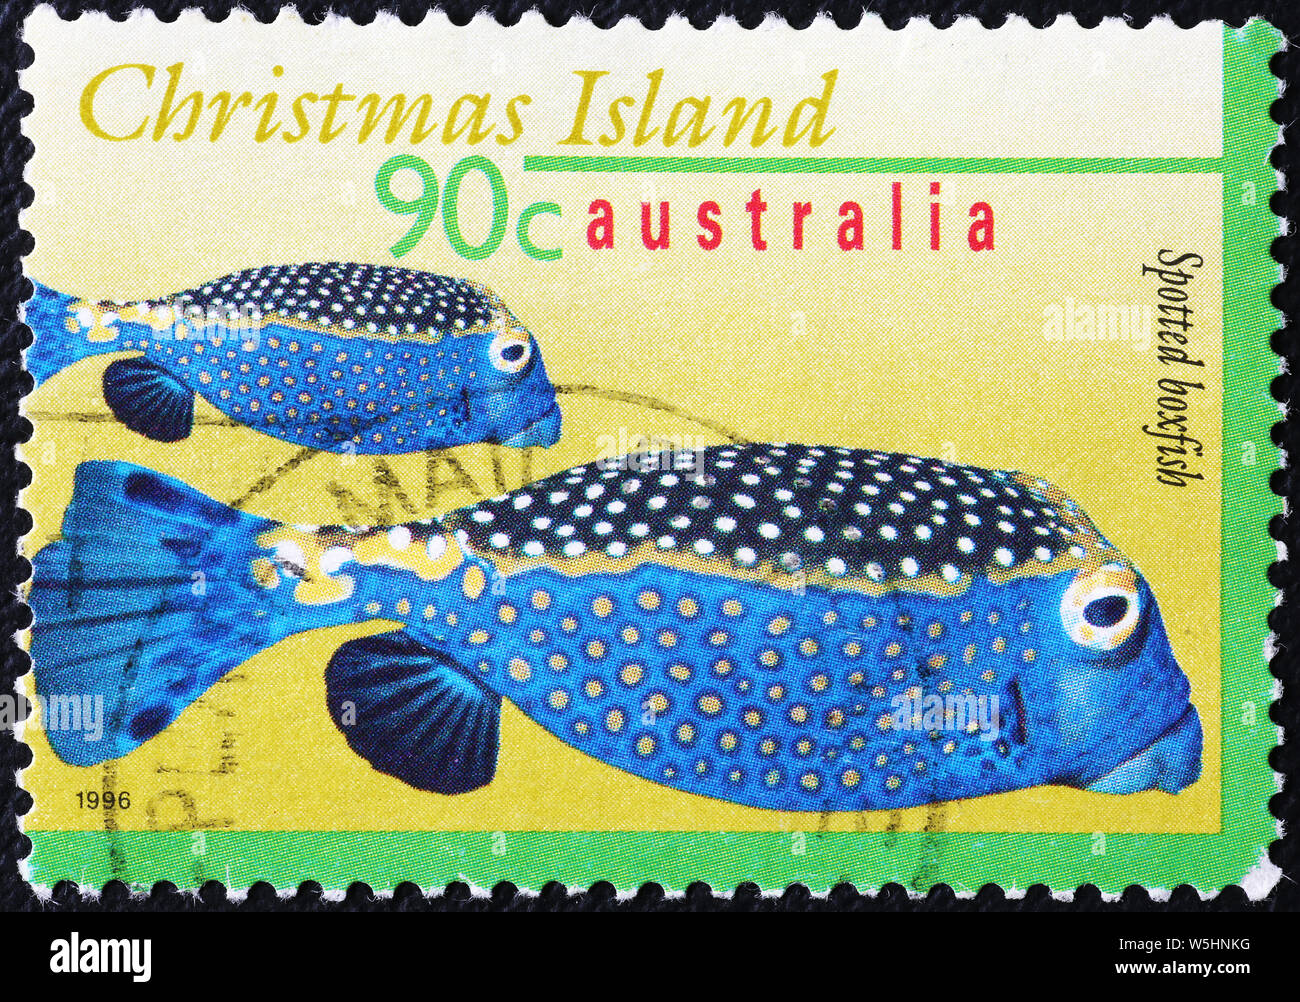 Two tropical fish on stamp of Christmas island Stock Photo